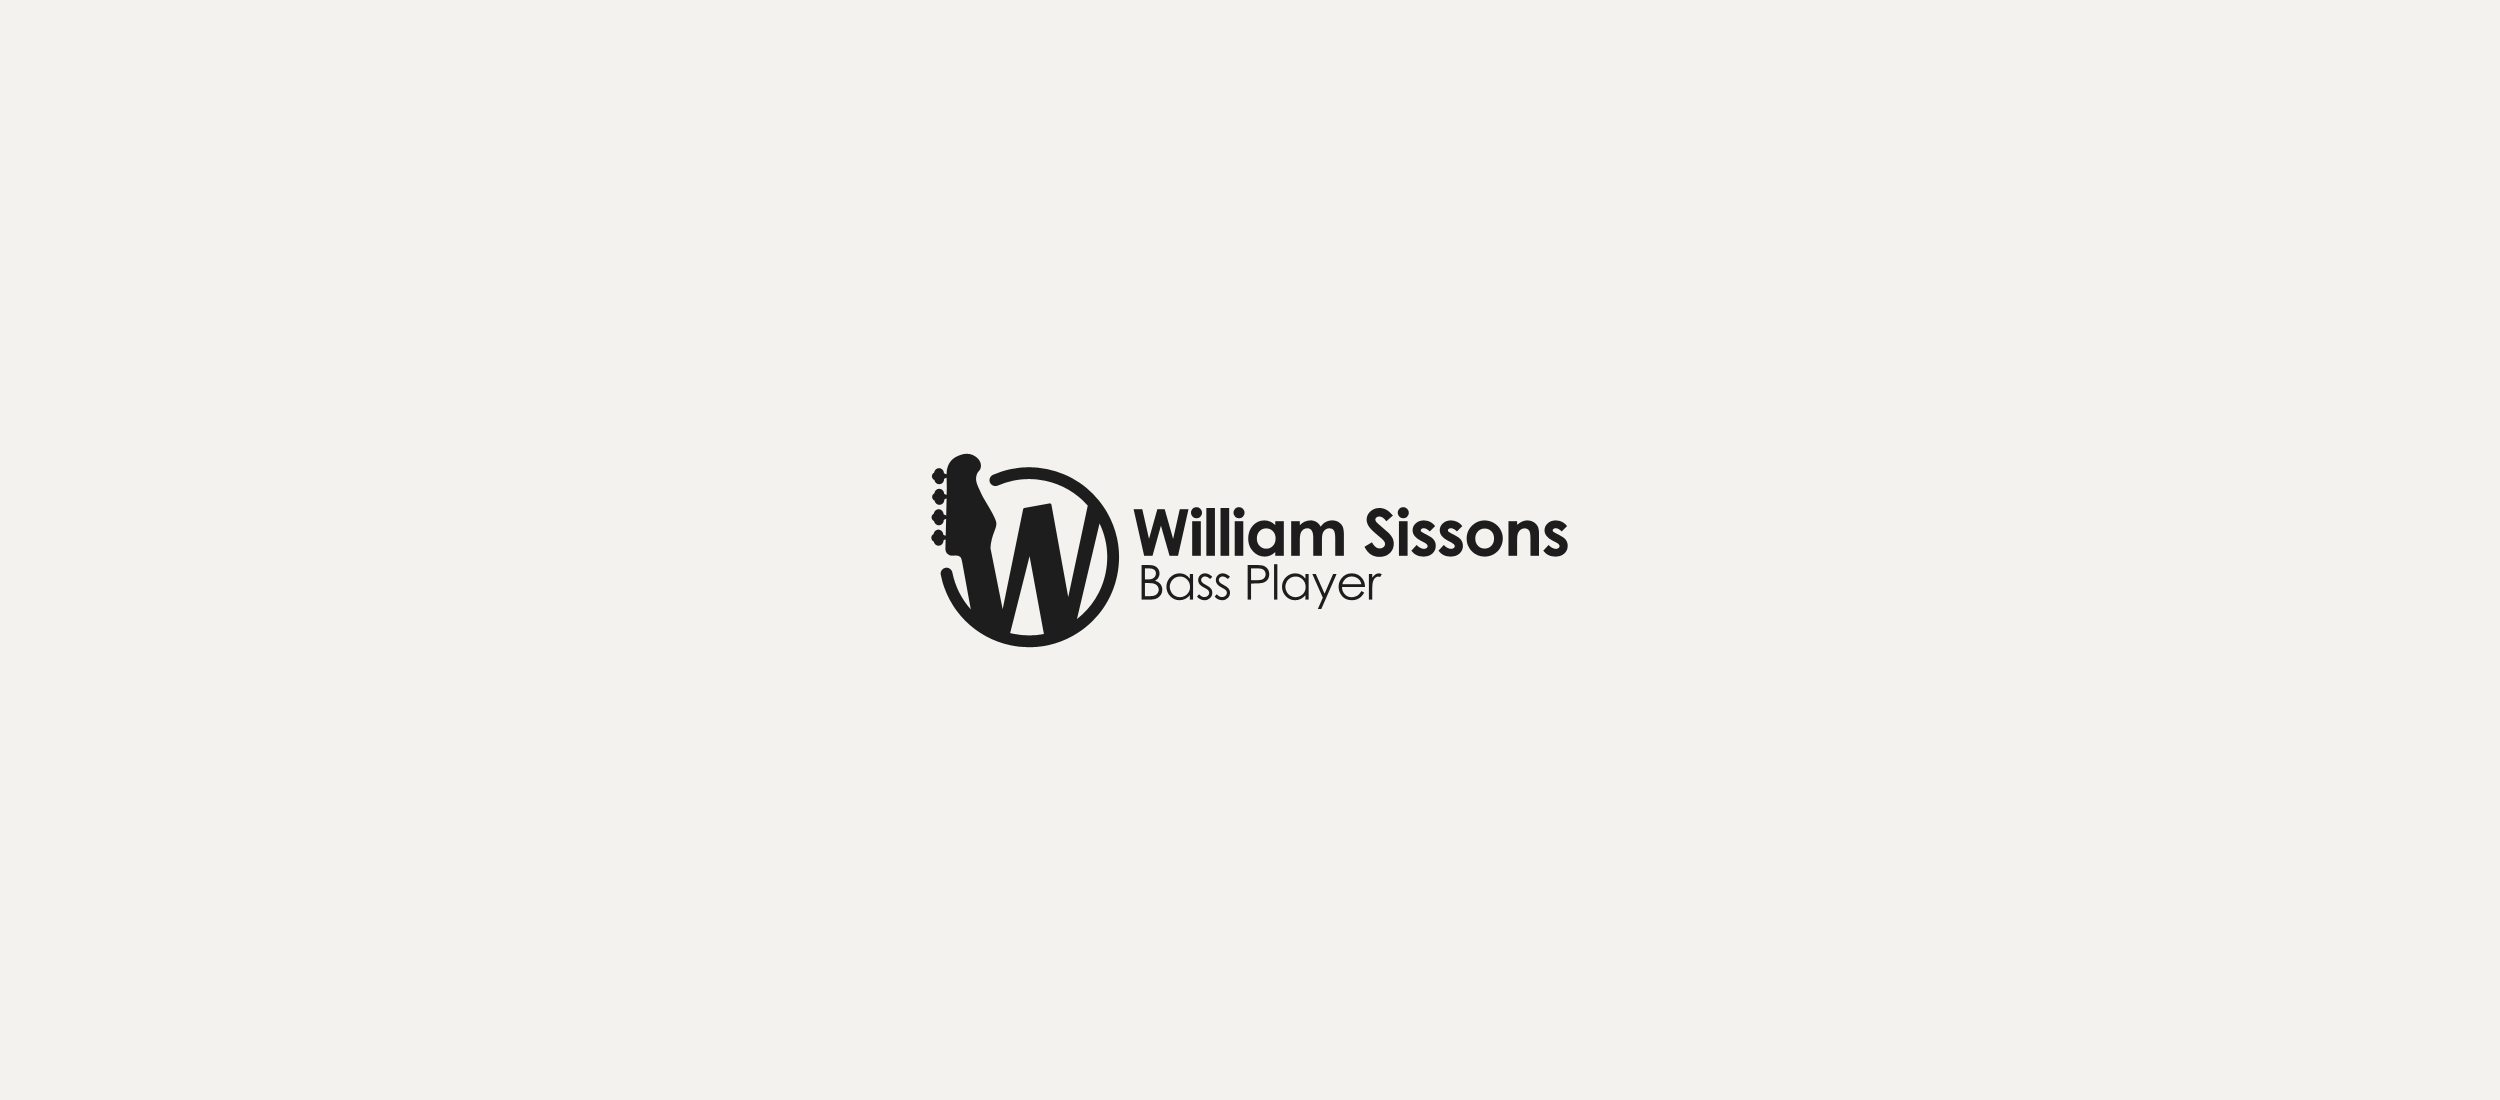 Williamd Sissons logo design.